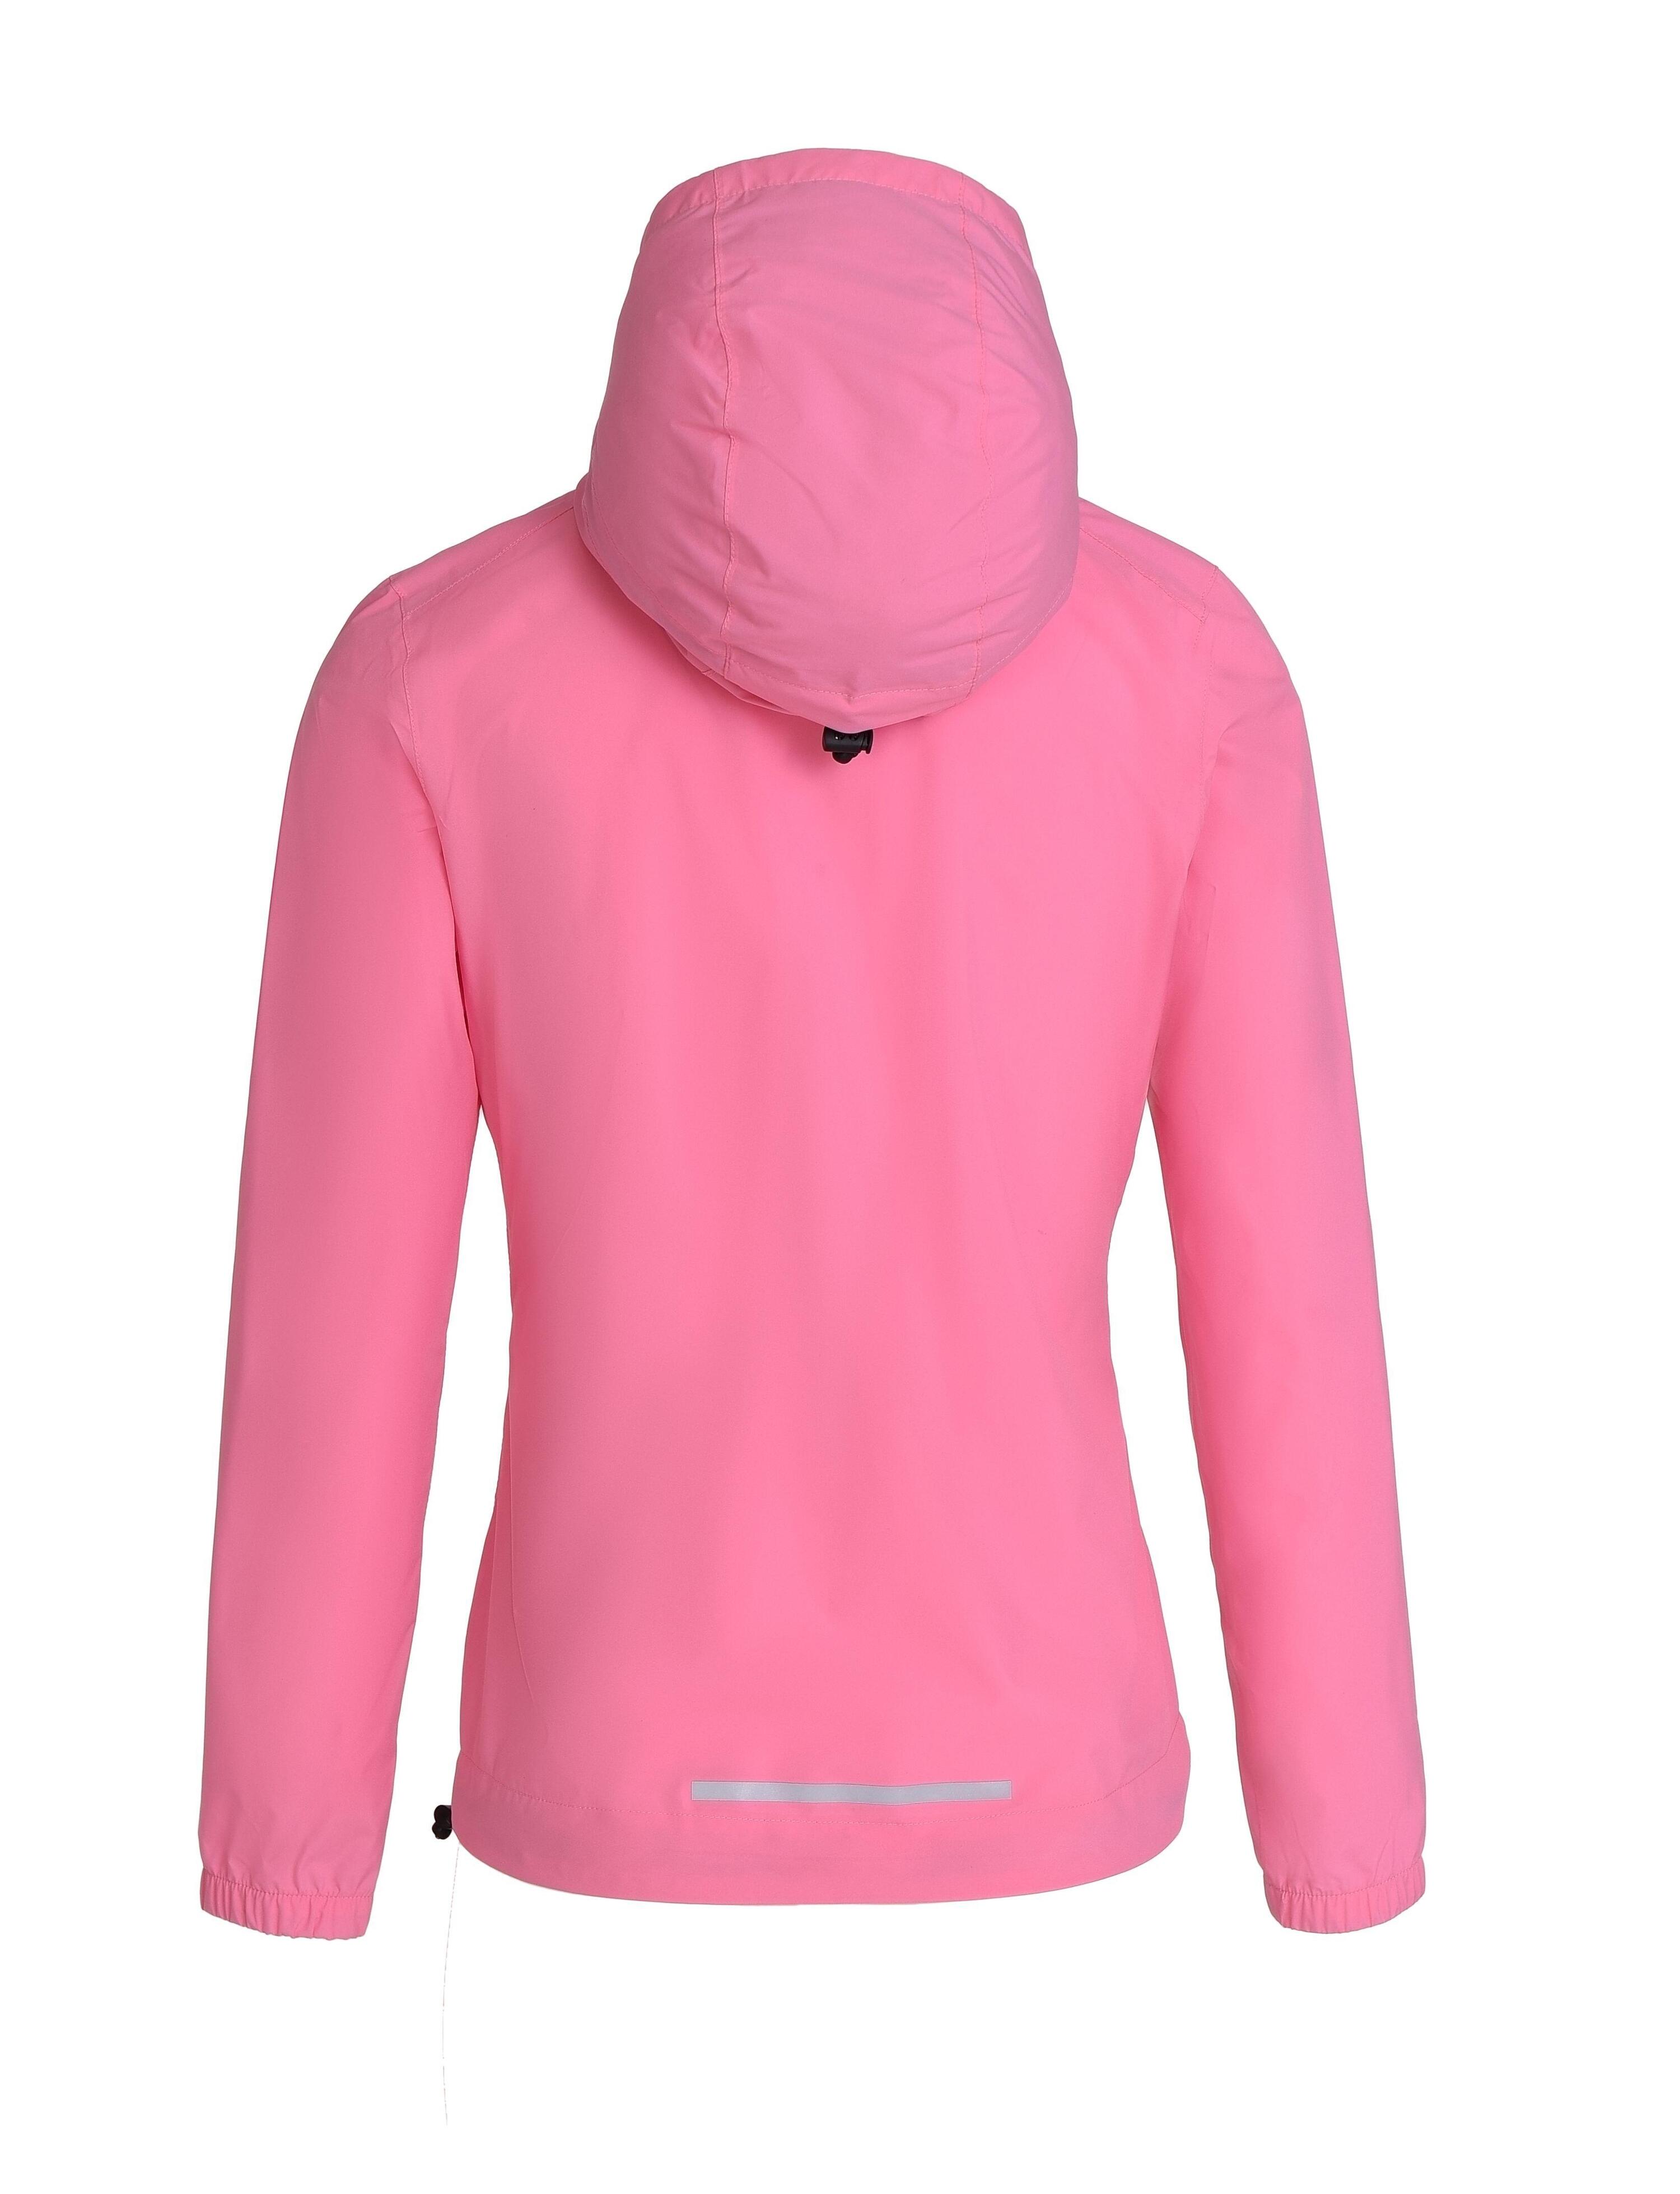 Girls' AirLite Rain Jacket with Zip Pockets - Sachet Pink 3/4